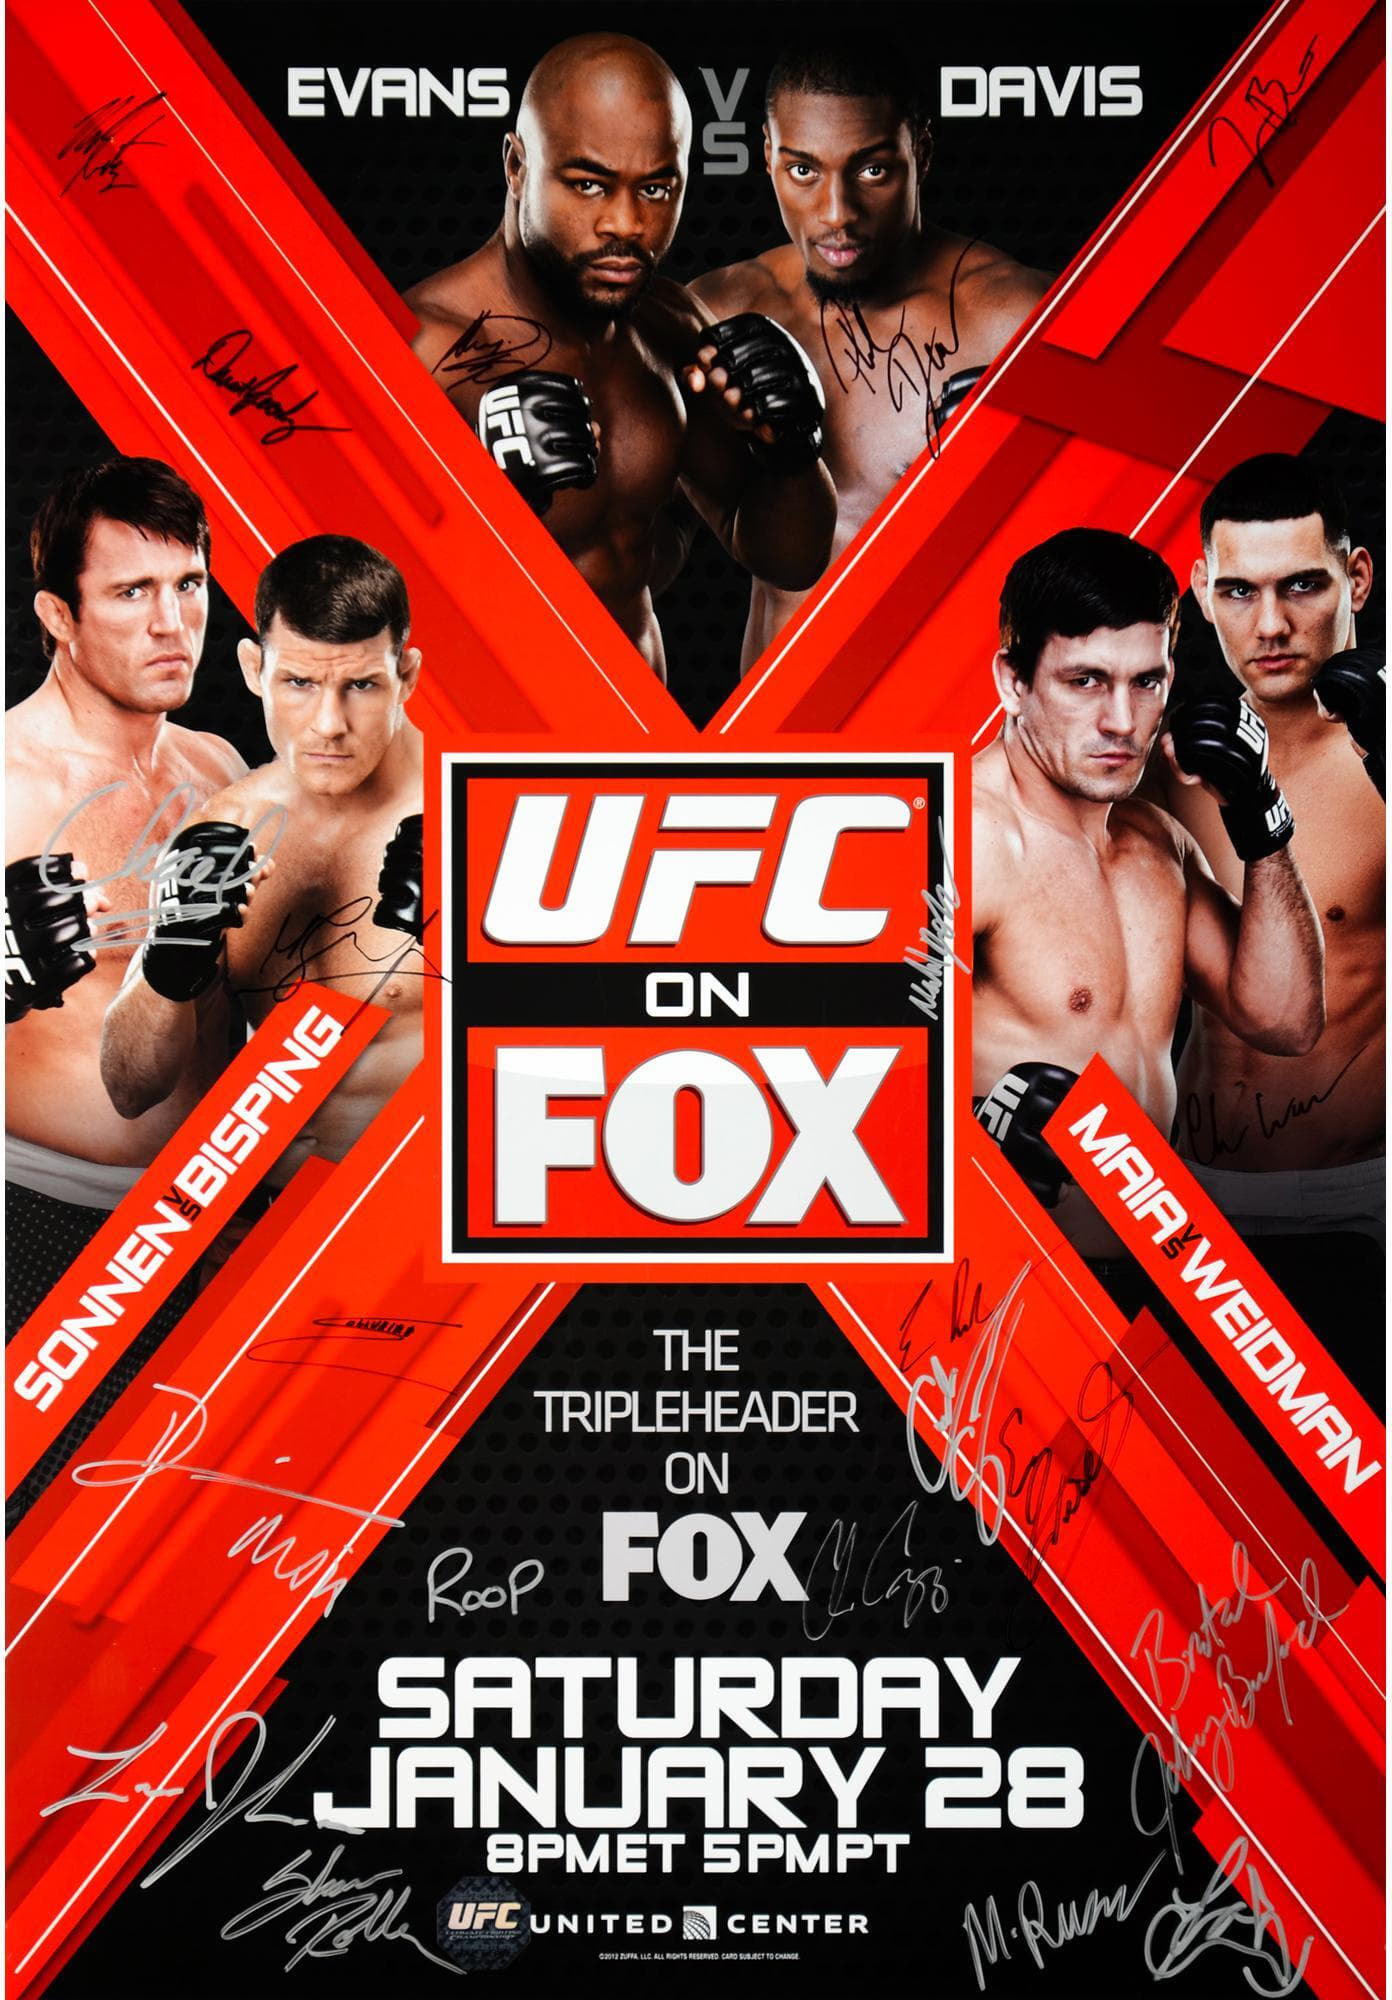 UFC on Fox 2: Evans vs. Davis (2012)